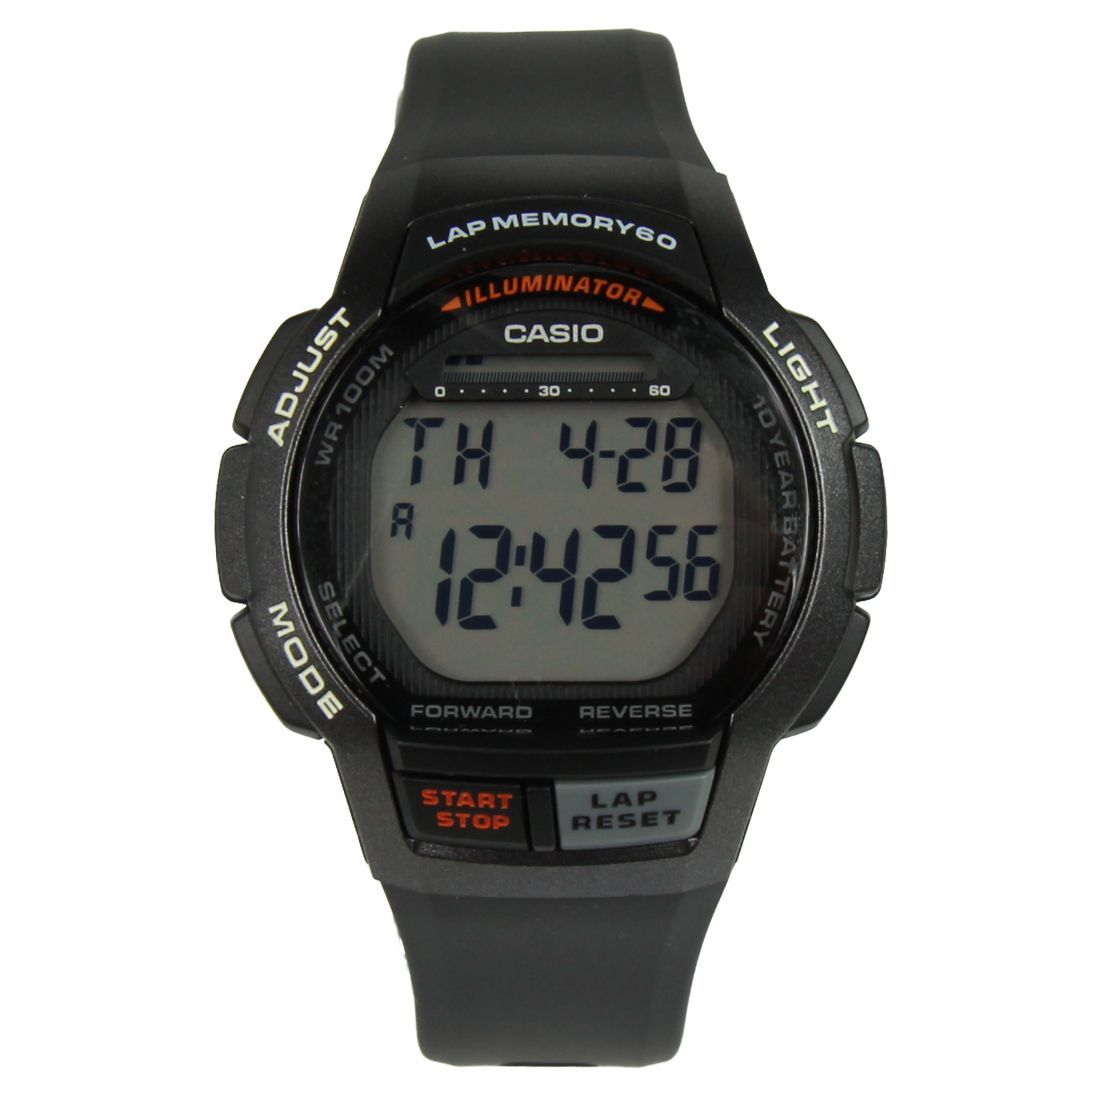 Casio Lap Memory Sports Watch 100mtr Grey_0